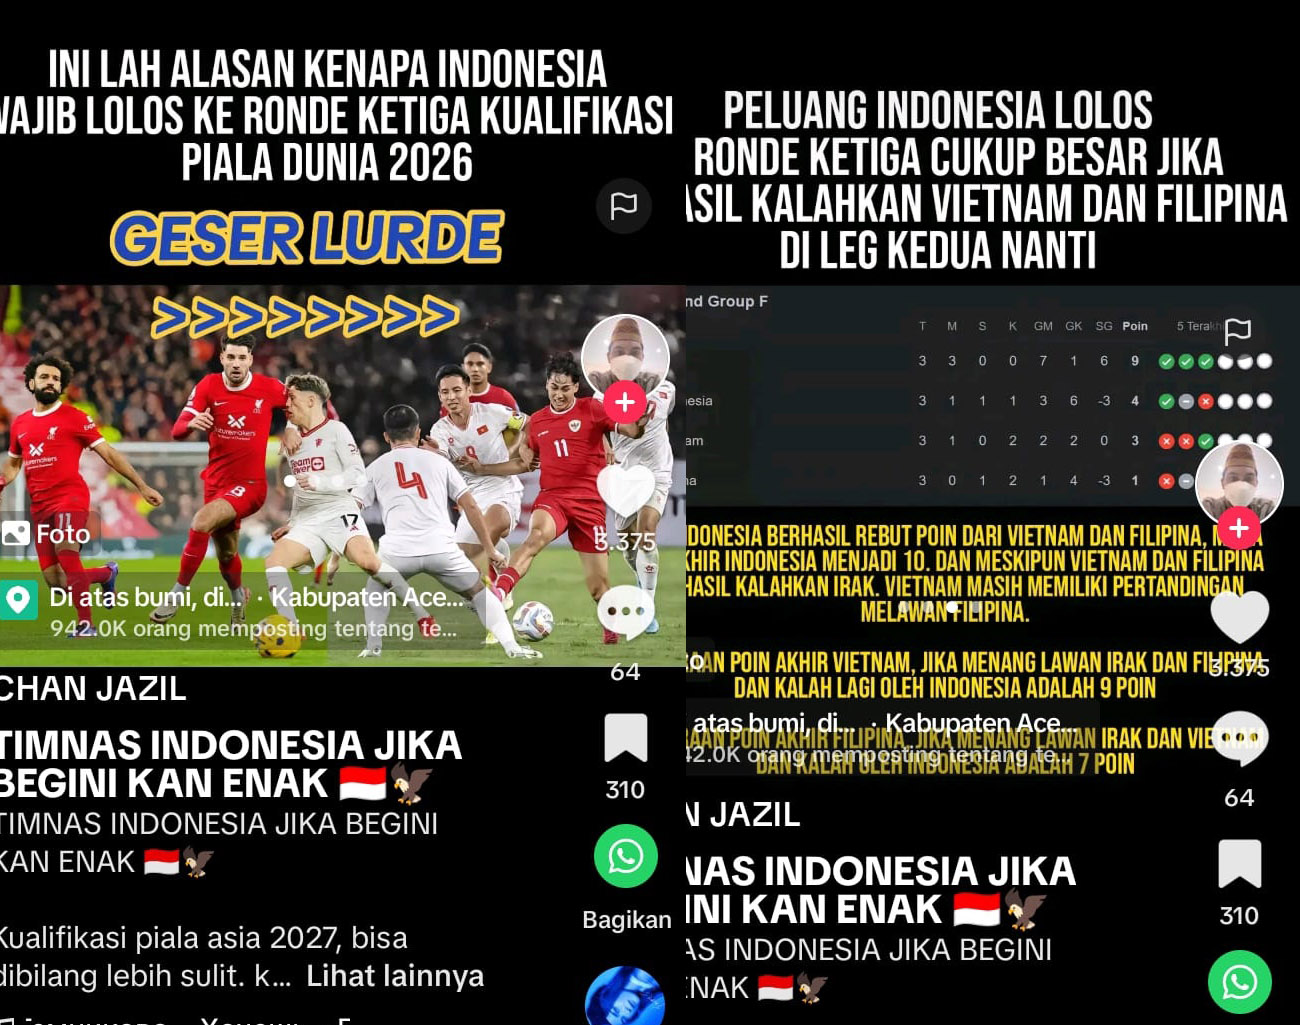 Indonesia Wajib Lolos Rode 3 Kualifikasi Piala Dunia 2026, Bisa Gugur Piala Asia 2027